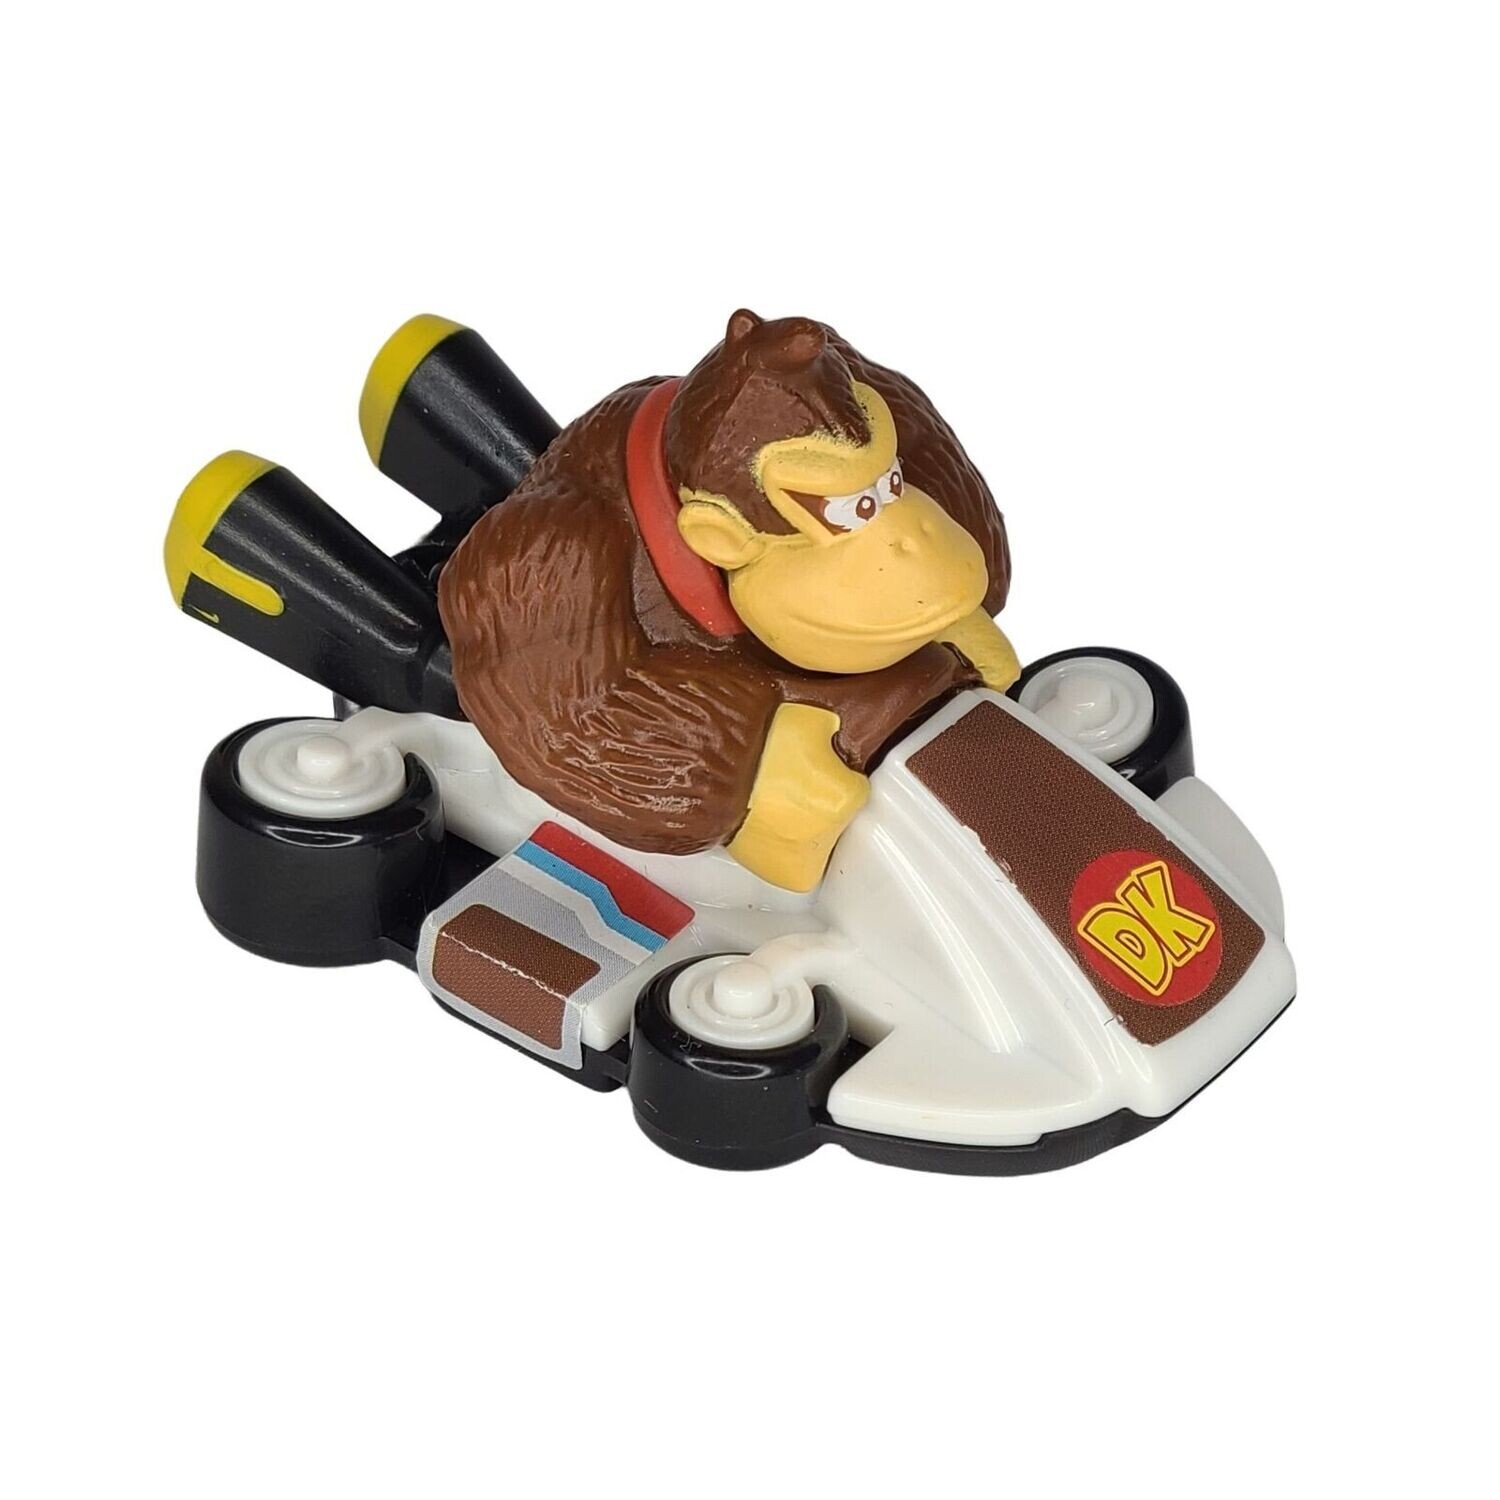 Mariokart Donkey Kong in Car Figure #7